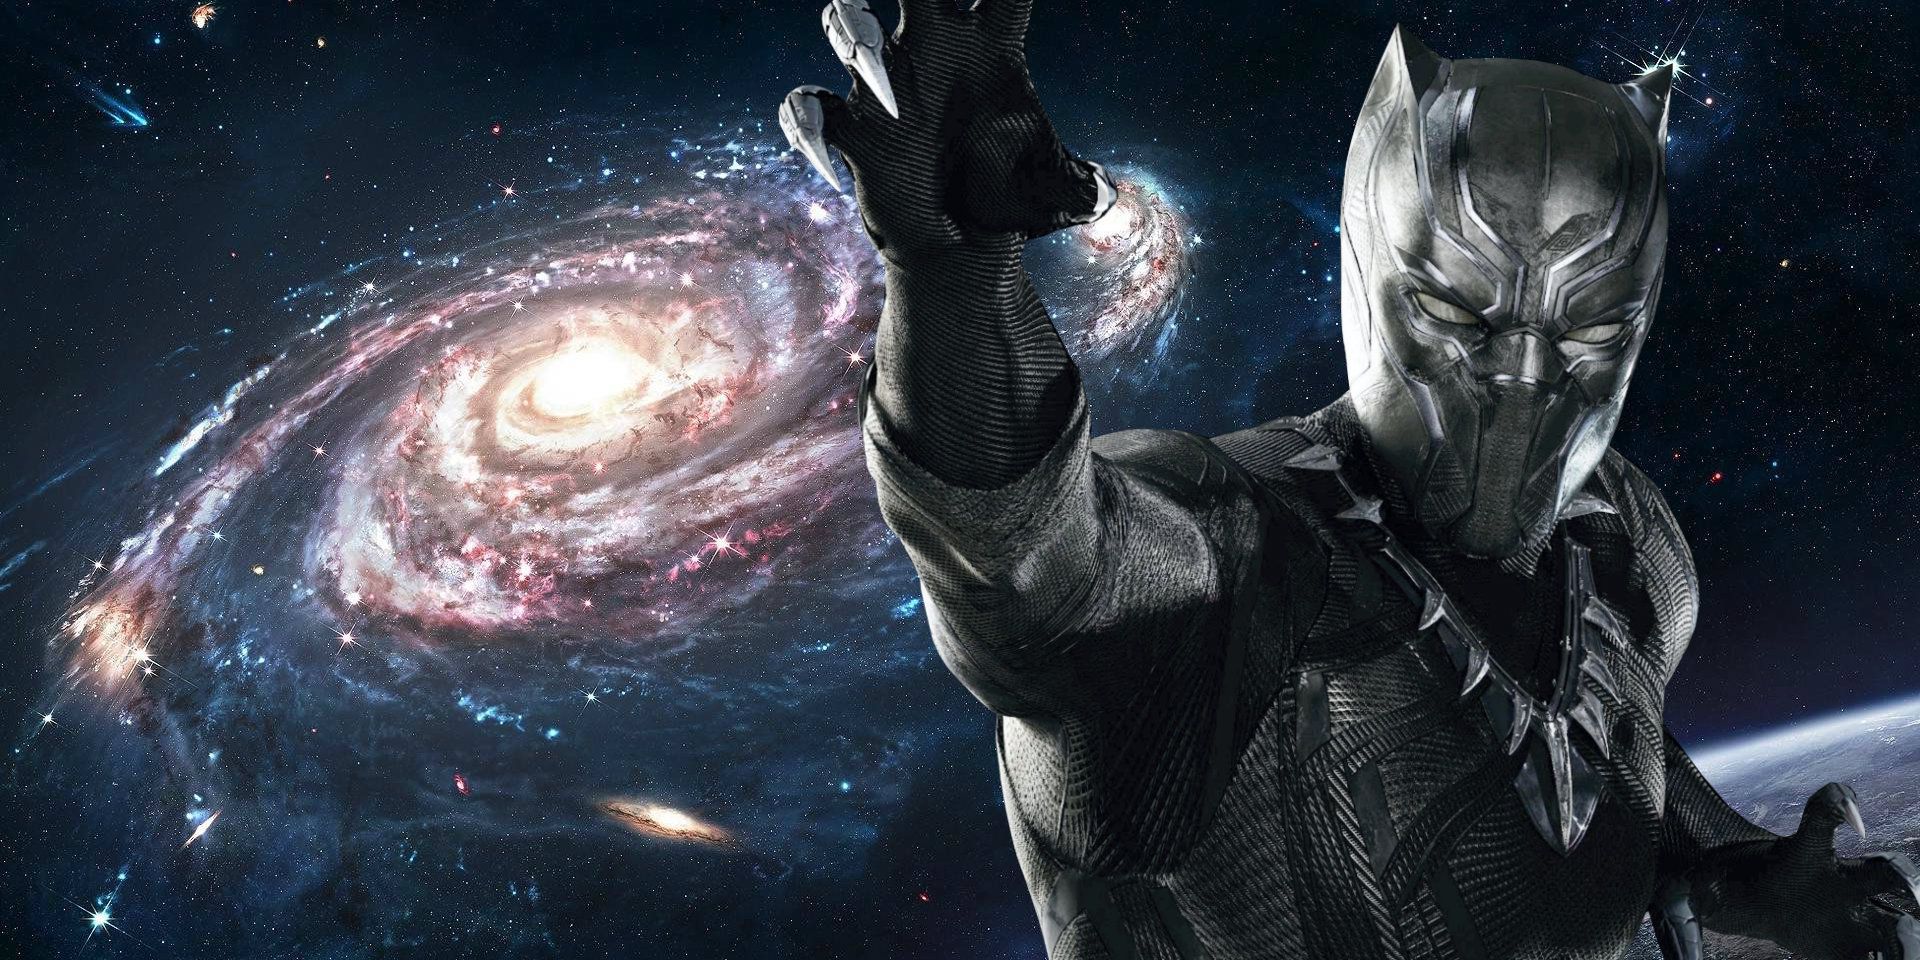 New Black Panther Comic Reboots Movie Heroes - In SPACE